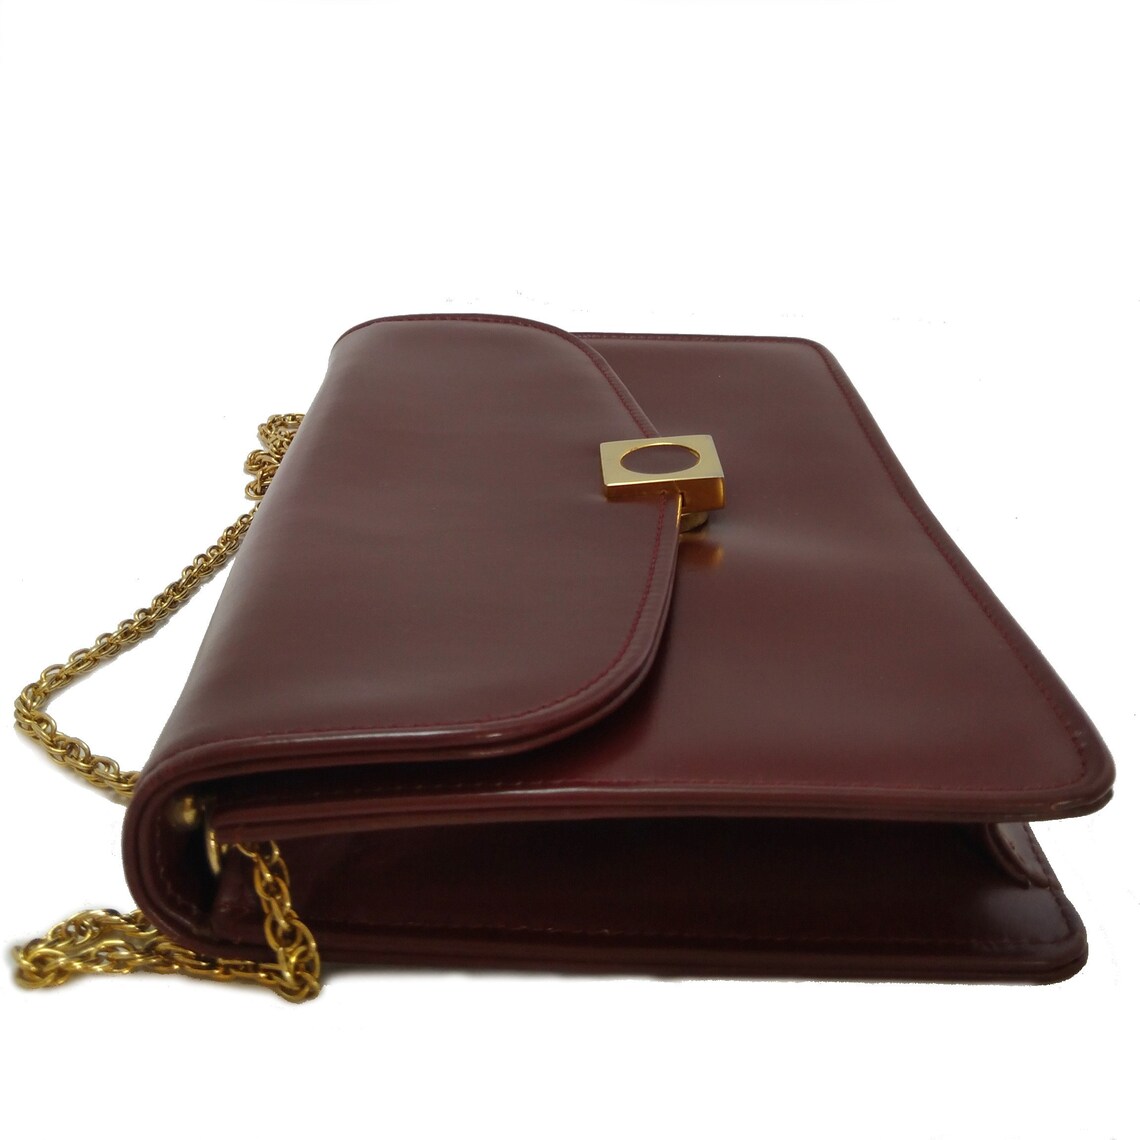 Gorgeous vintage Launer London luxury leather clutch bag | Etsy